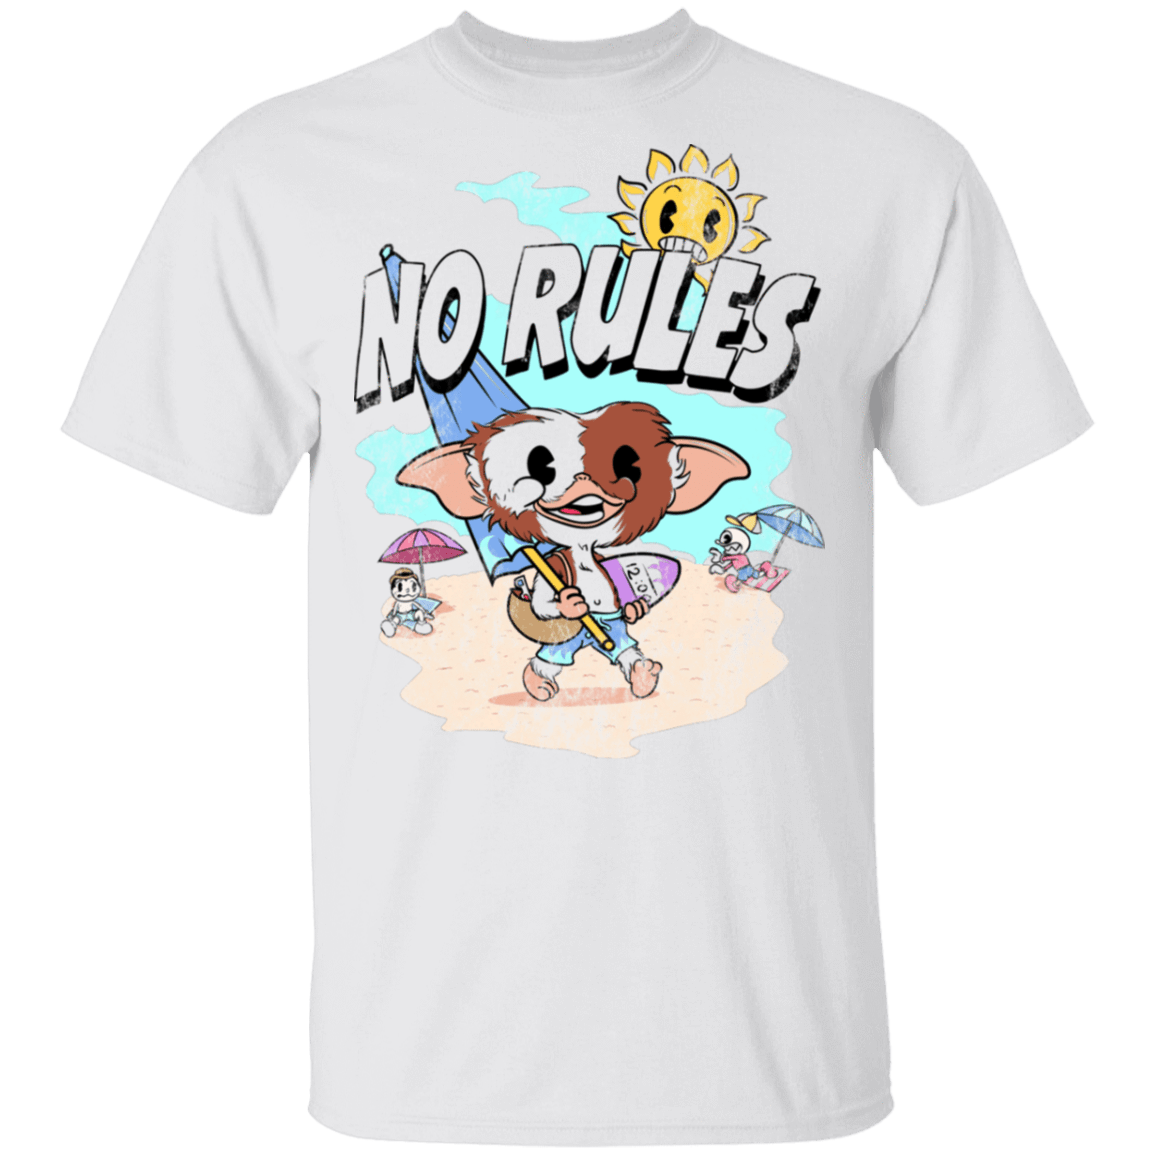 T-Shirts White / S No Rules T-Shirt